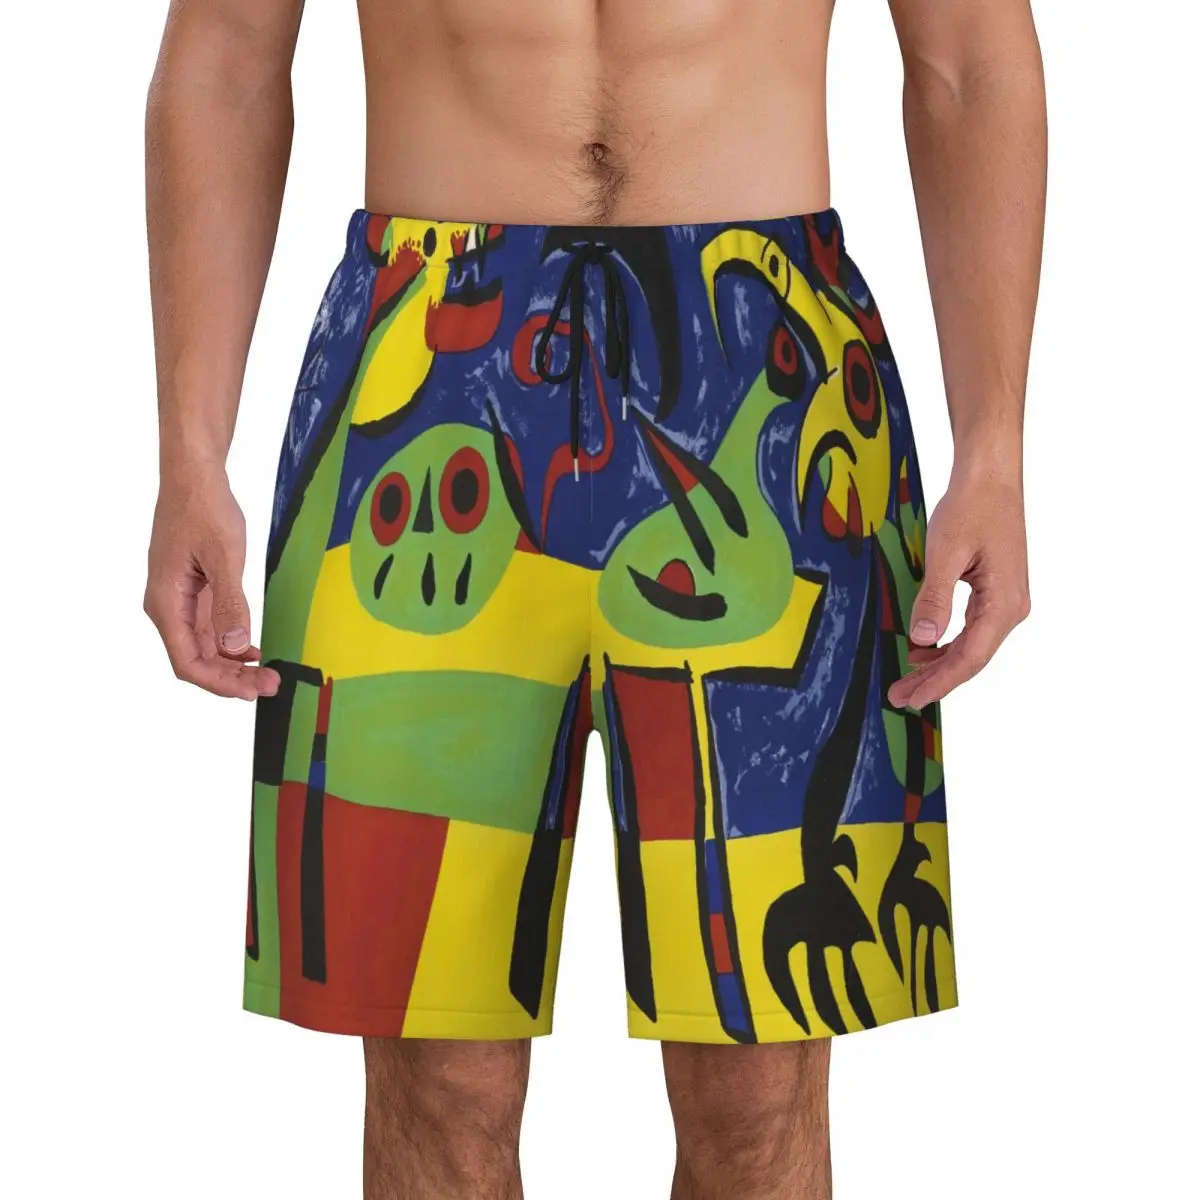 

Dog Barking At The Moon Print Men's Swim Trunks Quick Dry Swimwear Beach Board Shorts Joan Miro Abstract Art Boardshorts